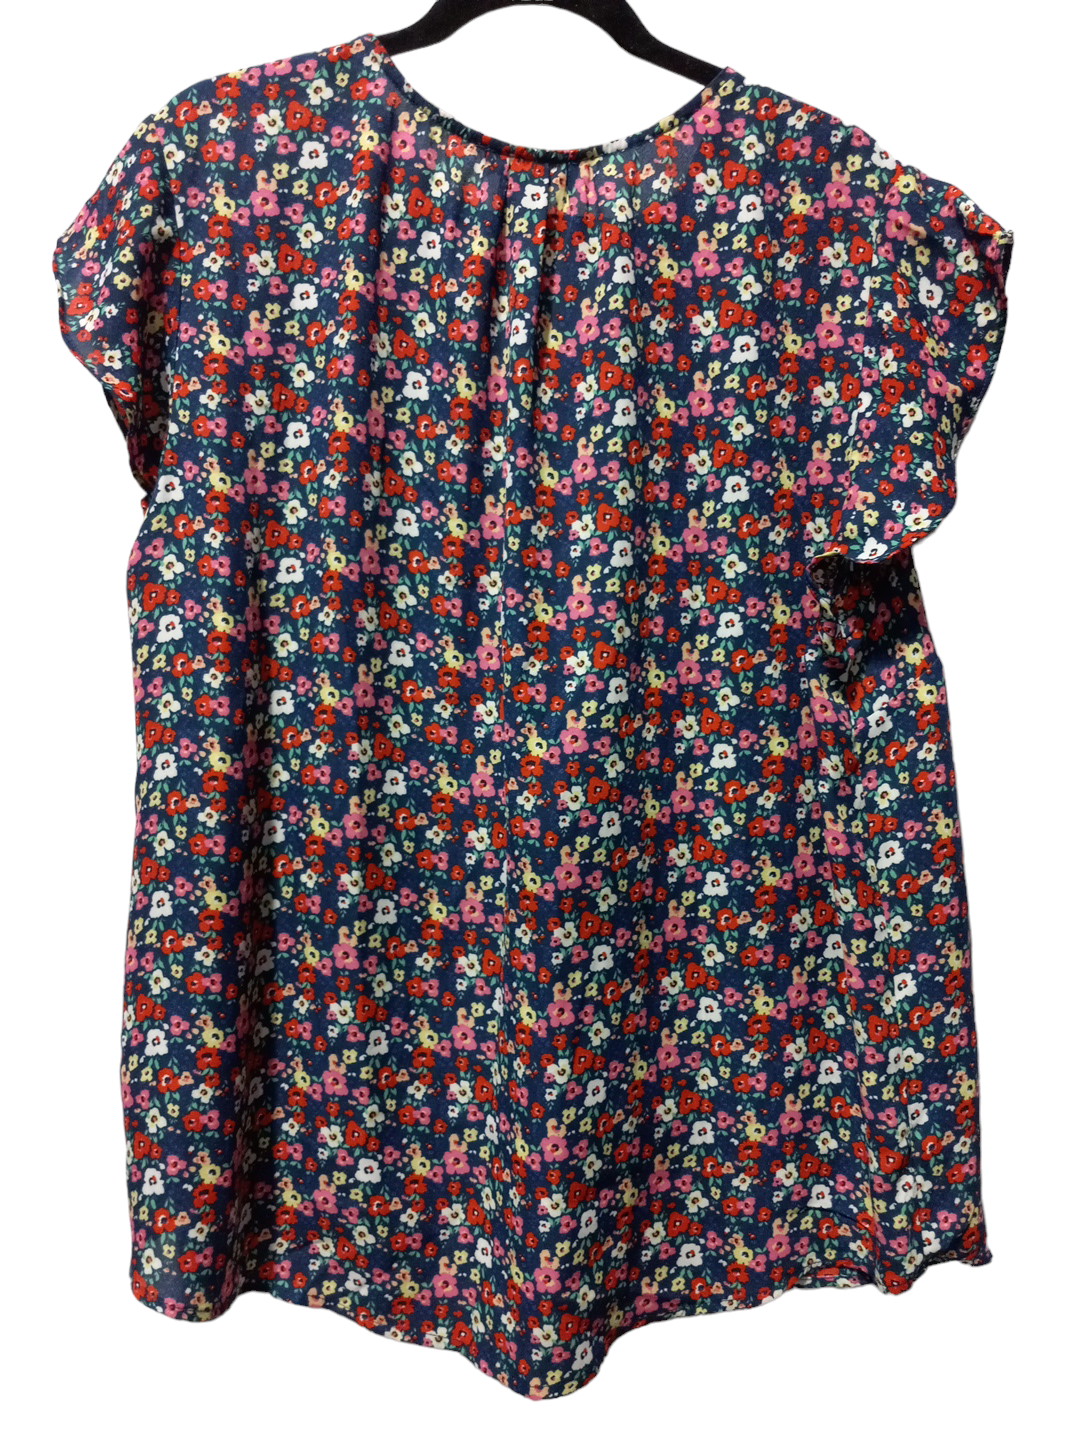 Floral Print Blouse Short Sleeve Cynthia Rowley, Size 1x